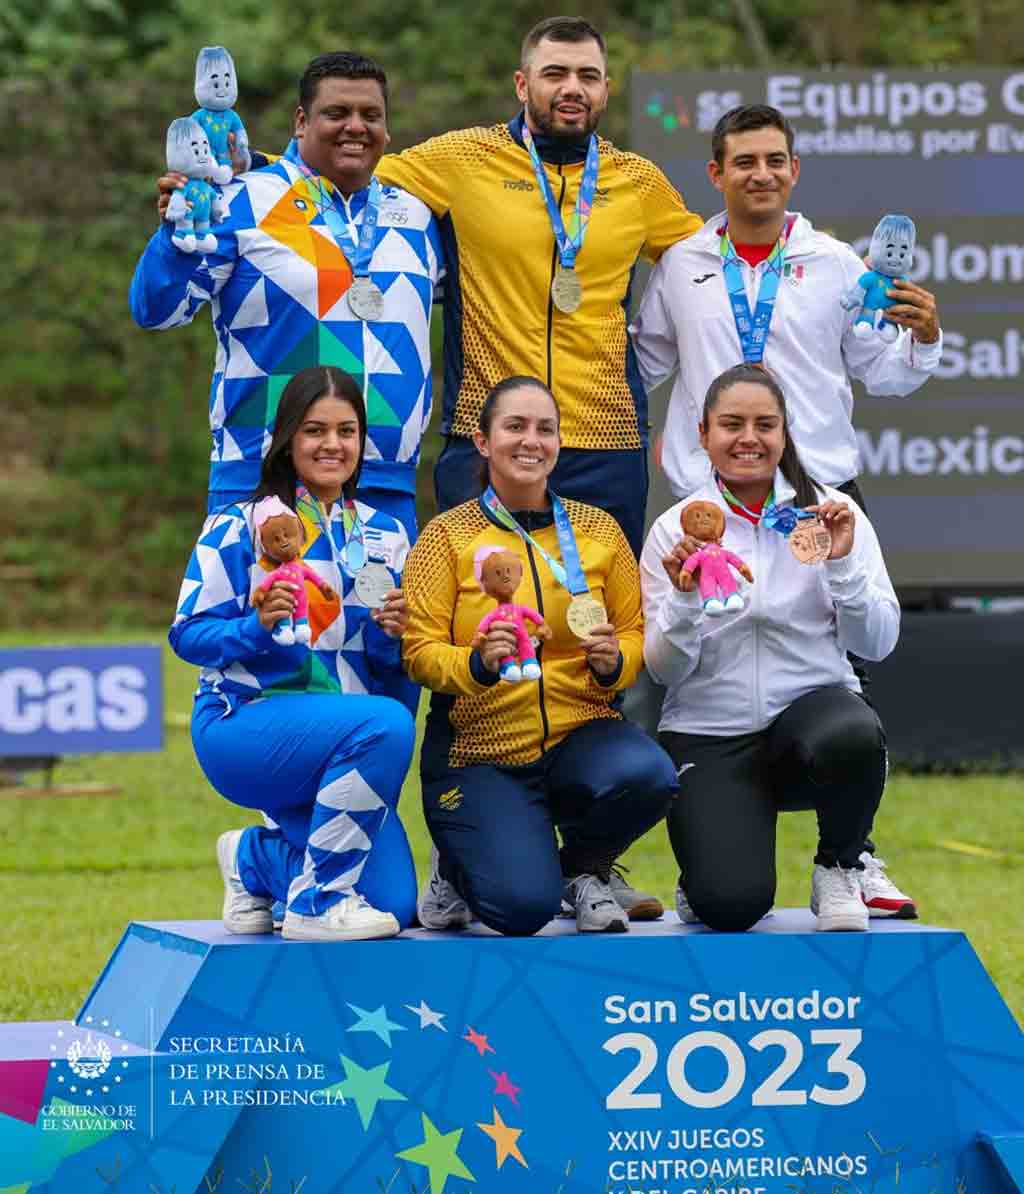  mexico-conquista-oro-y-bronce-en-tiro-con-arco-centroamericano